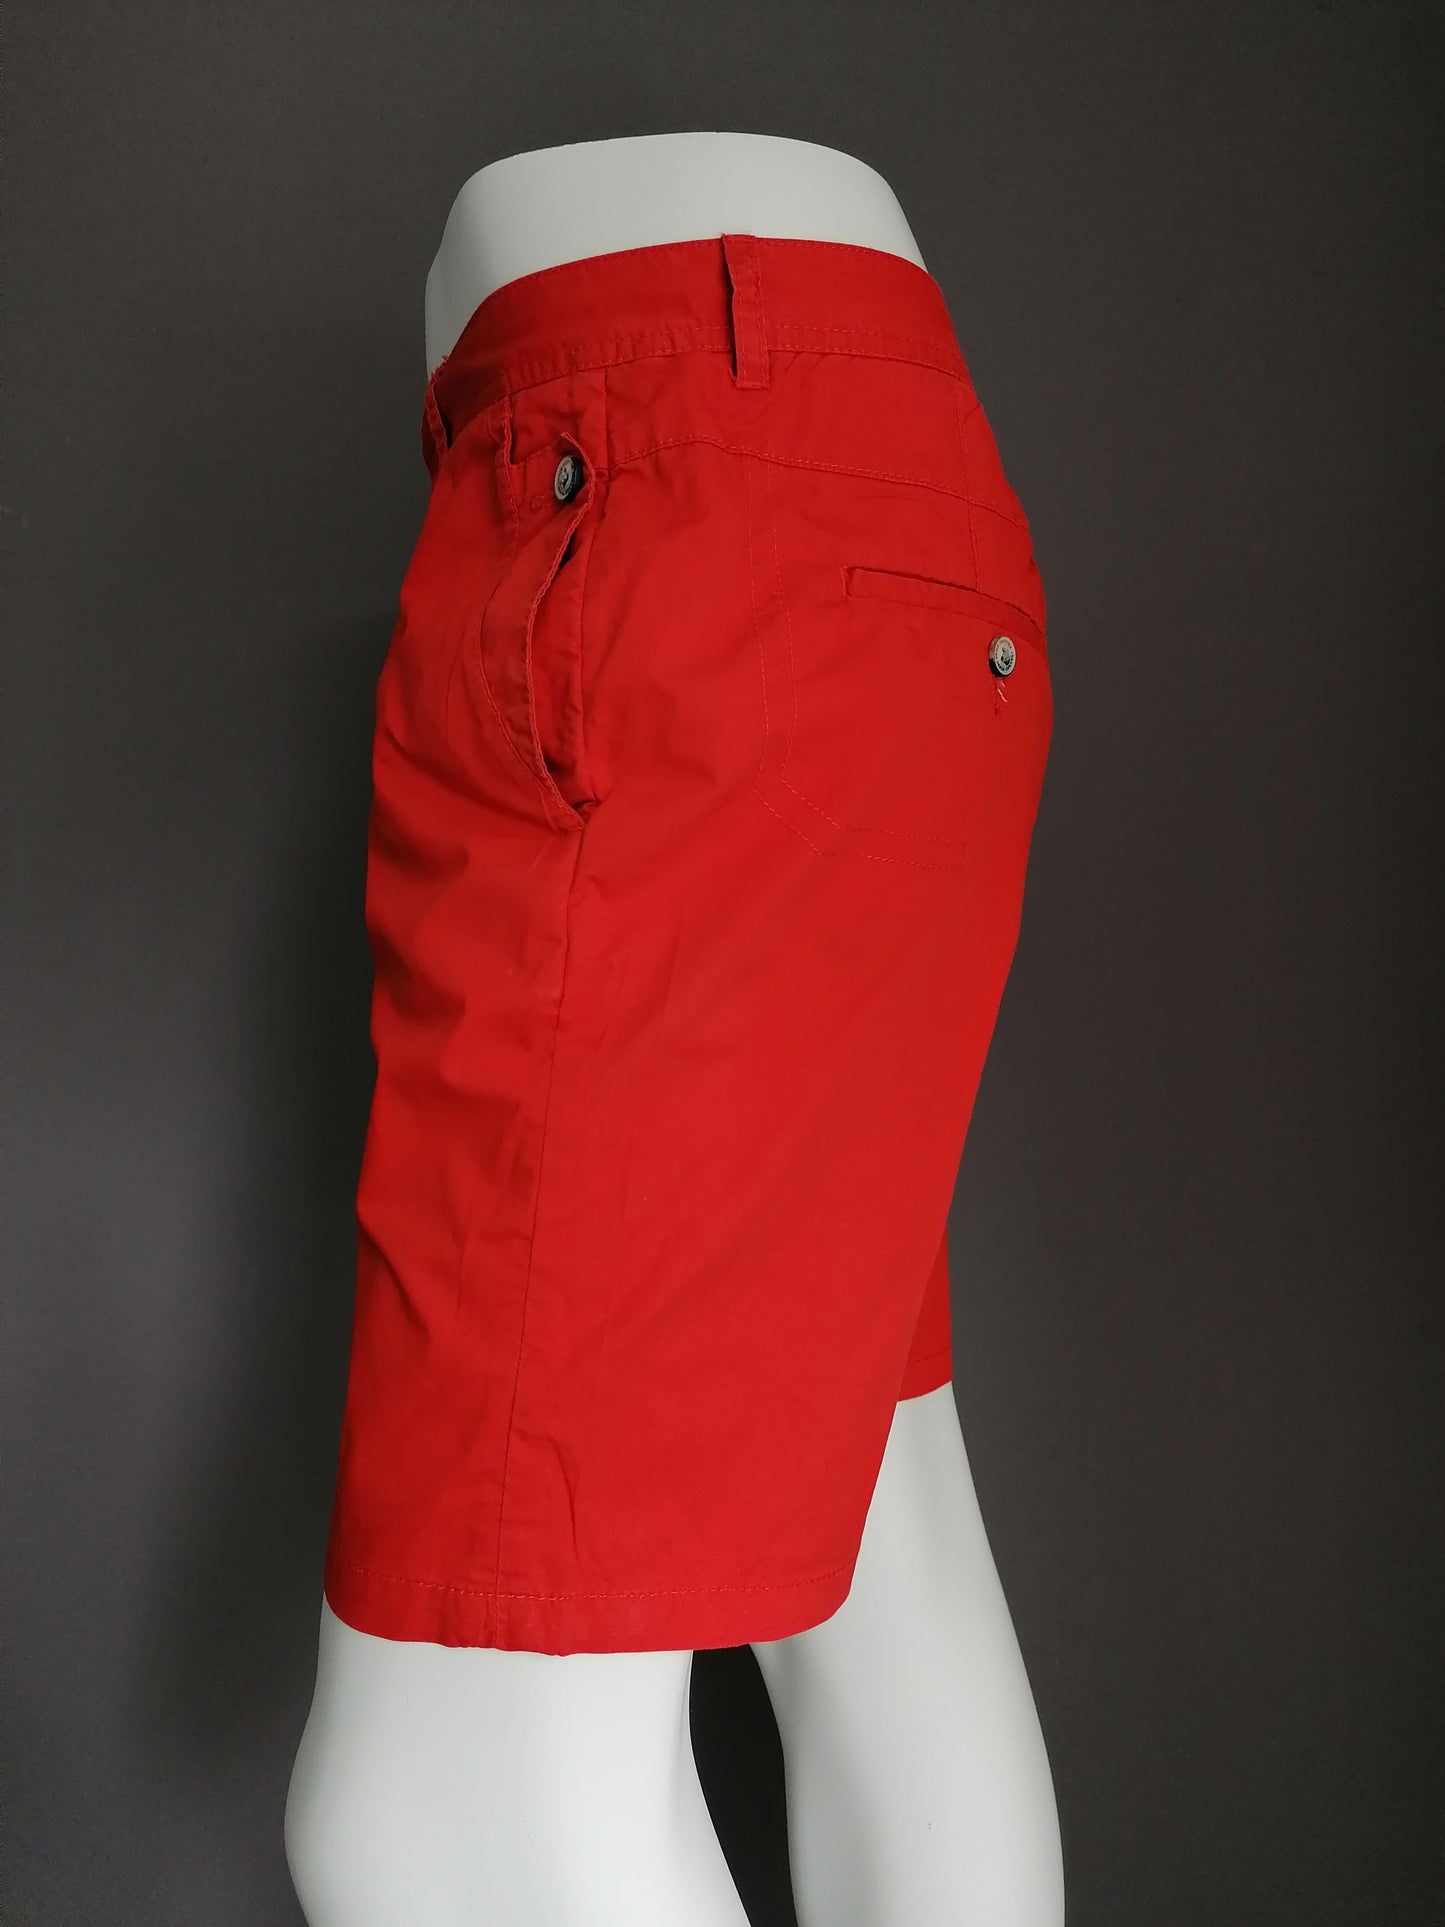 Zara Man korte broek. Oranje gekleurd. Maat W34